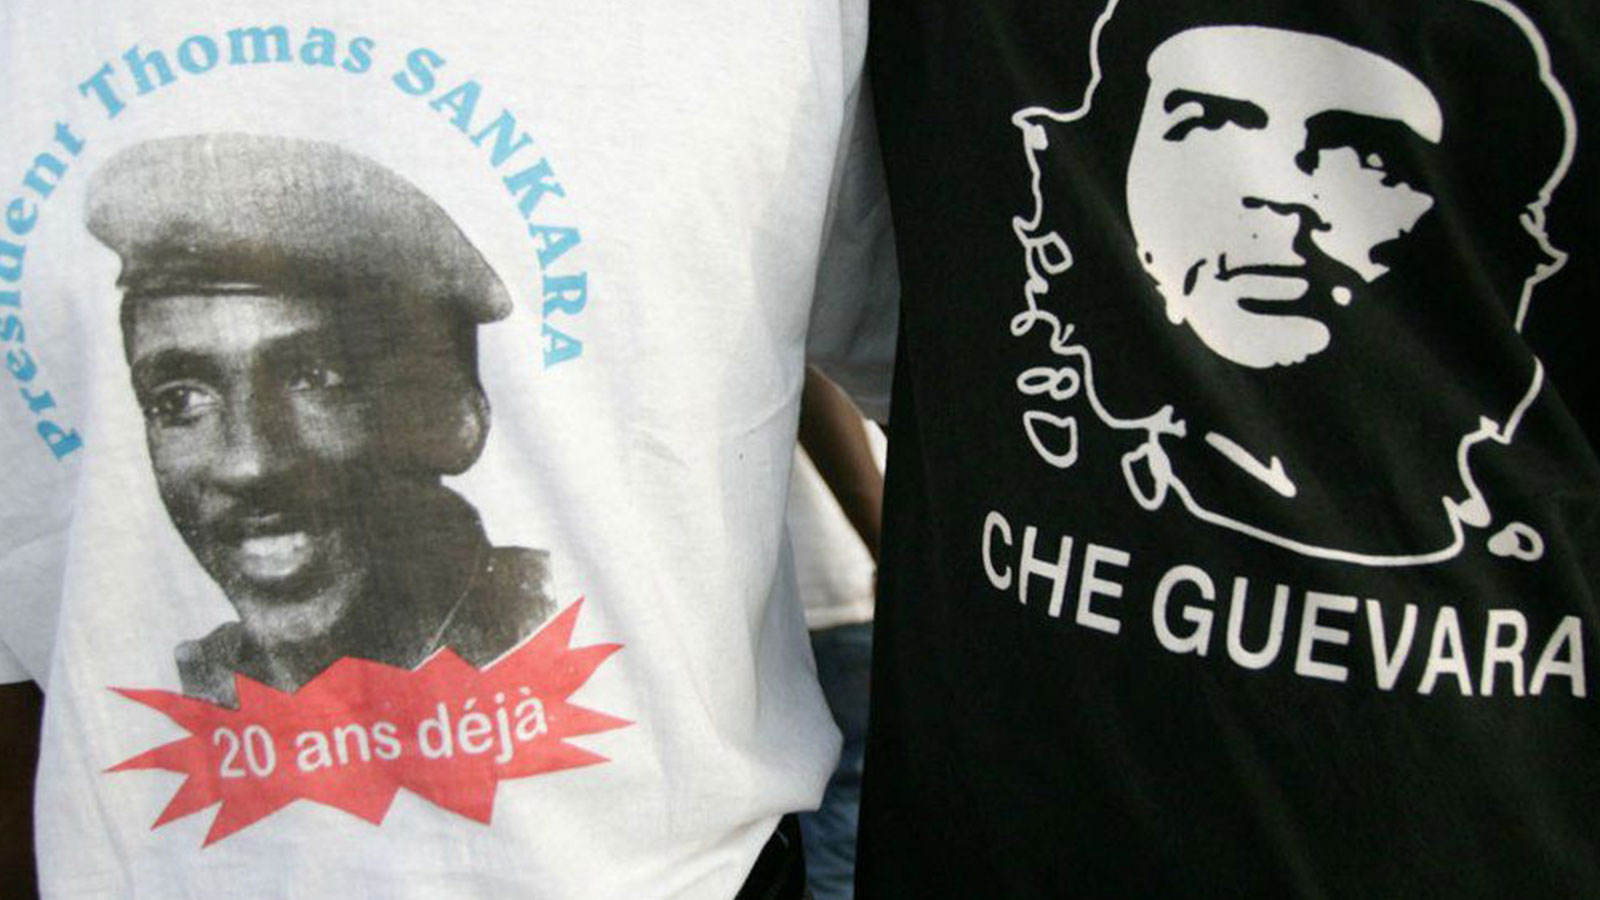 Sankara is known as "Africa's Che Guevara"